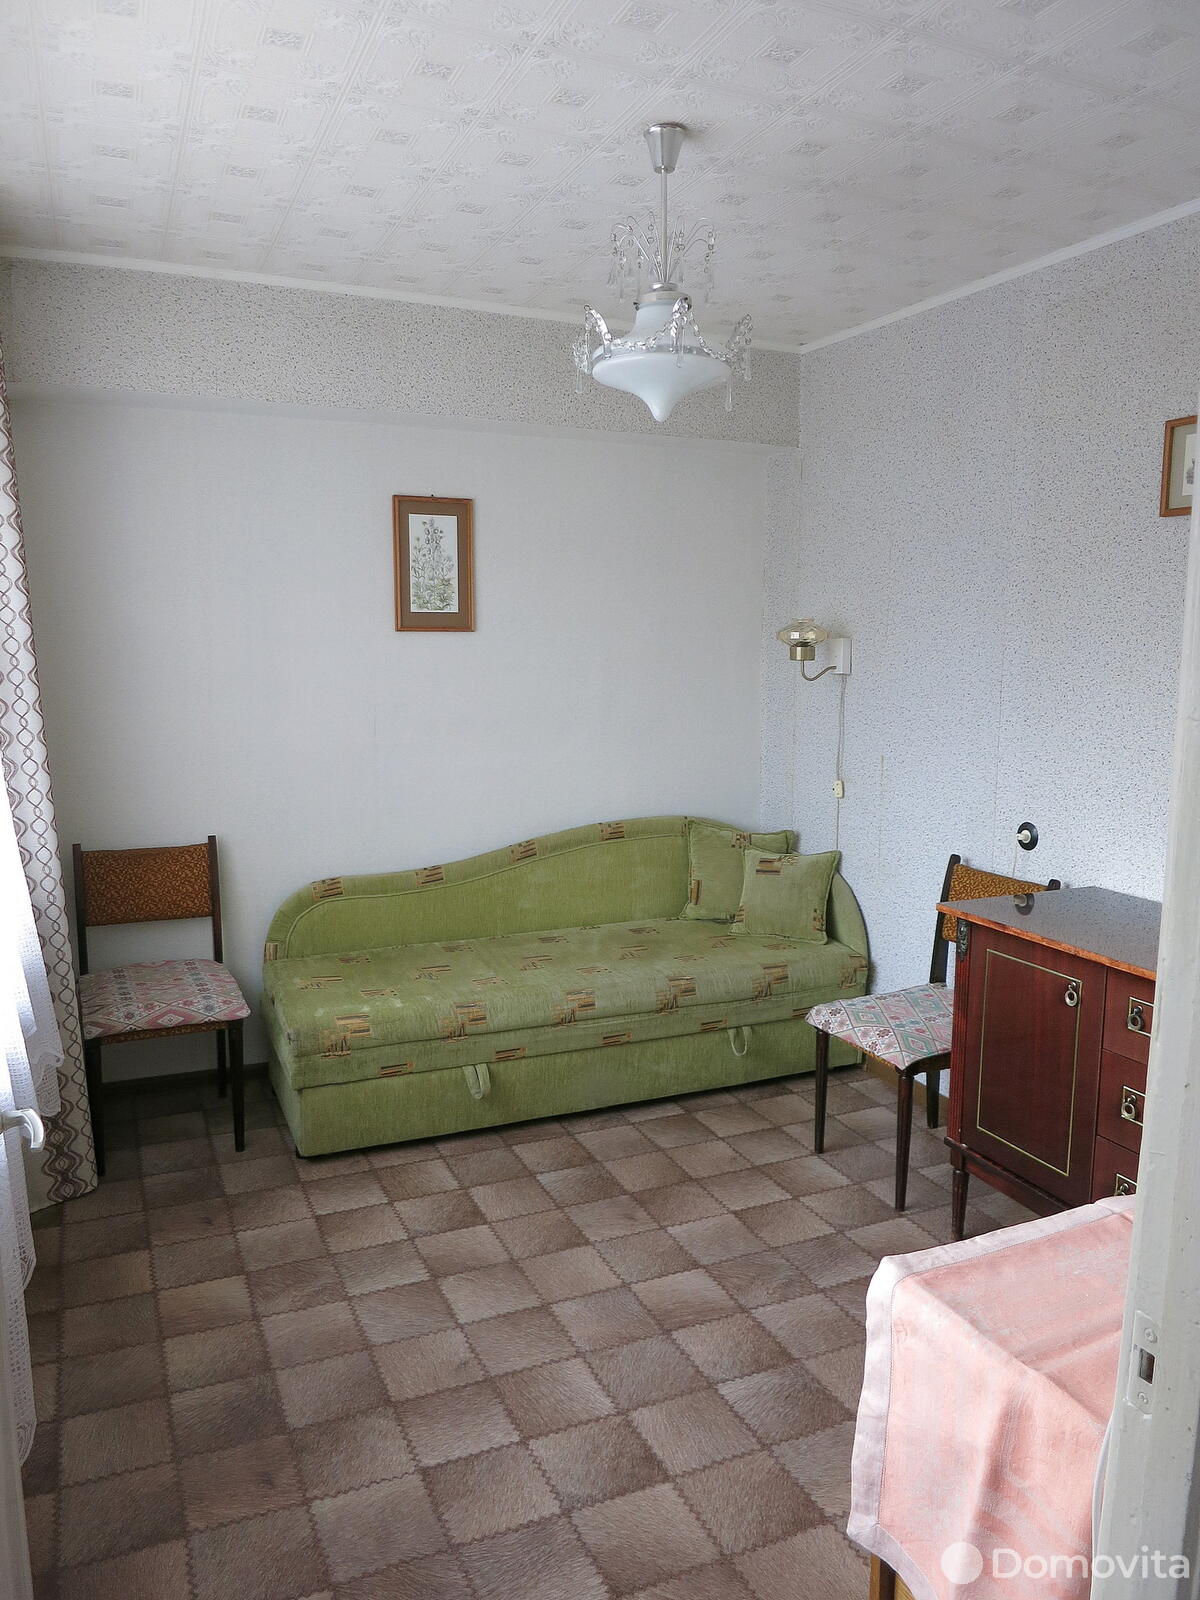 квартира, Минск, ул. Матусевича, д. 6, стоимость аренды 836 р./мес.